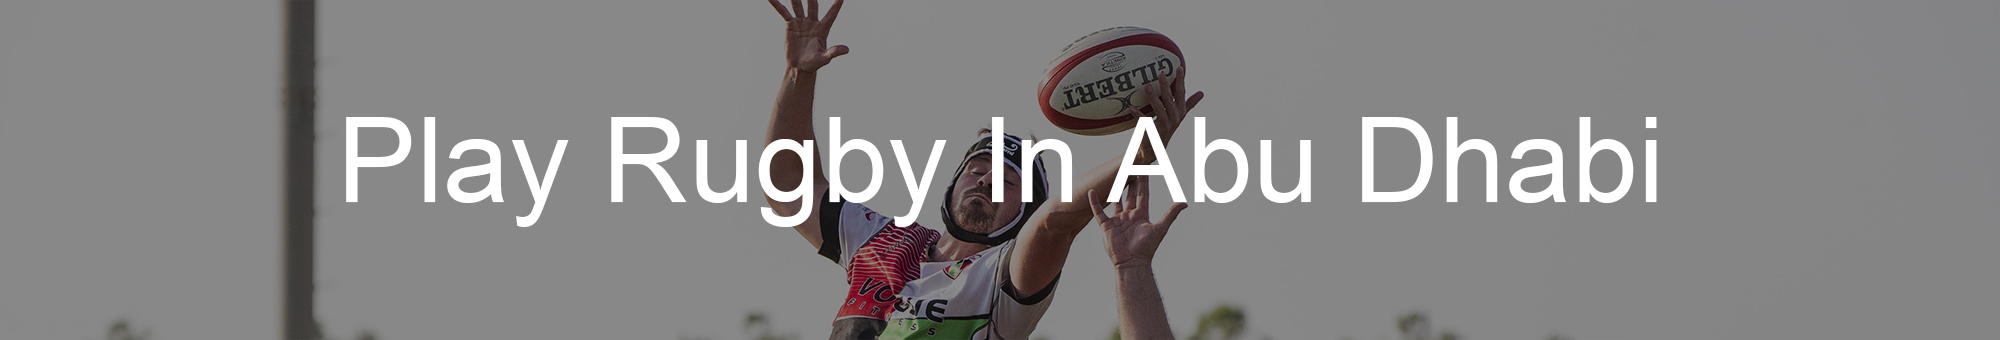 Play Rugby In Abu Dhabi